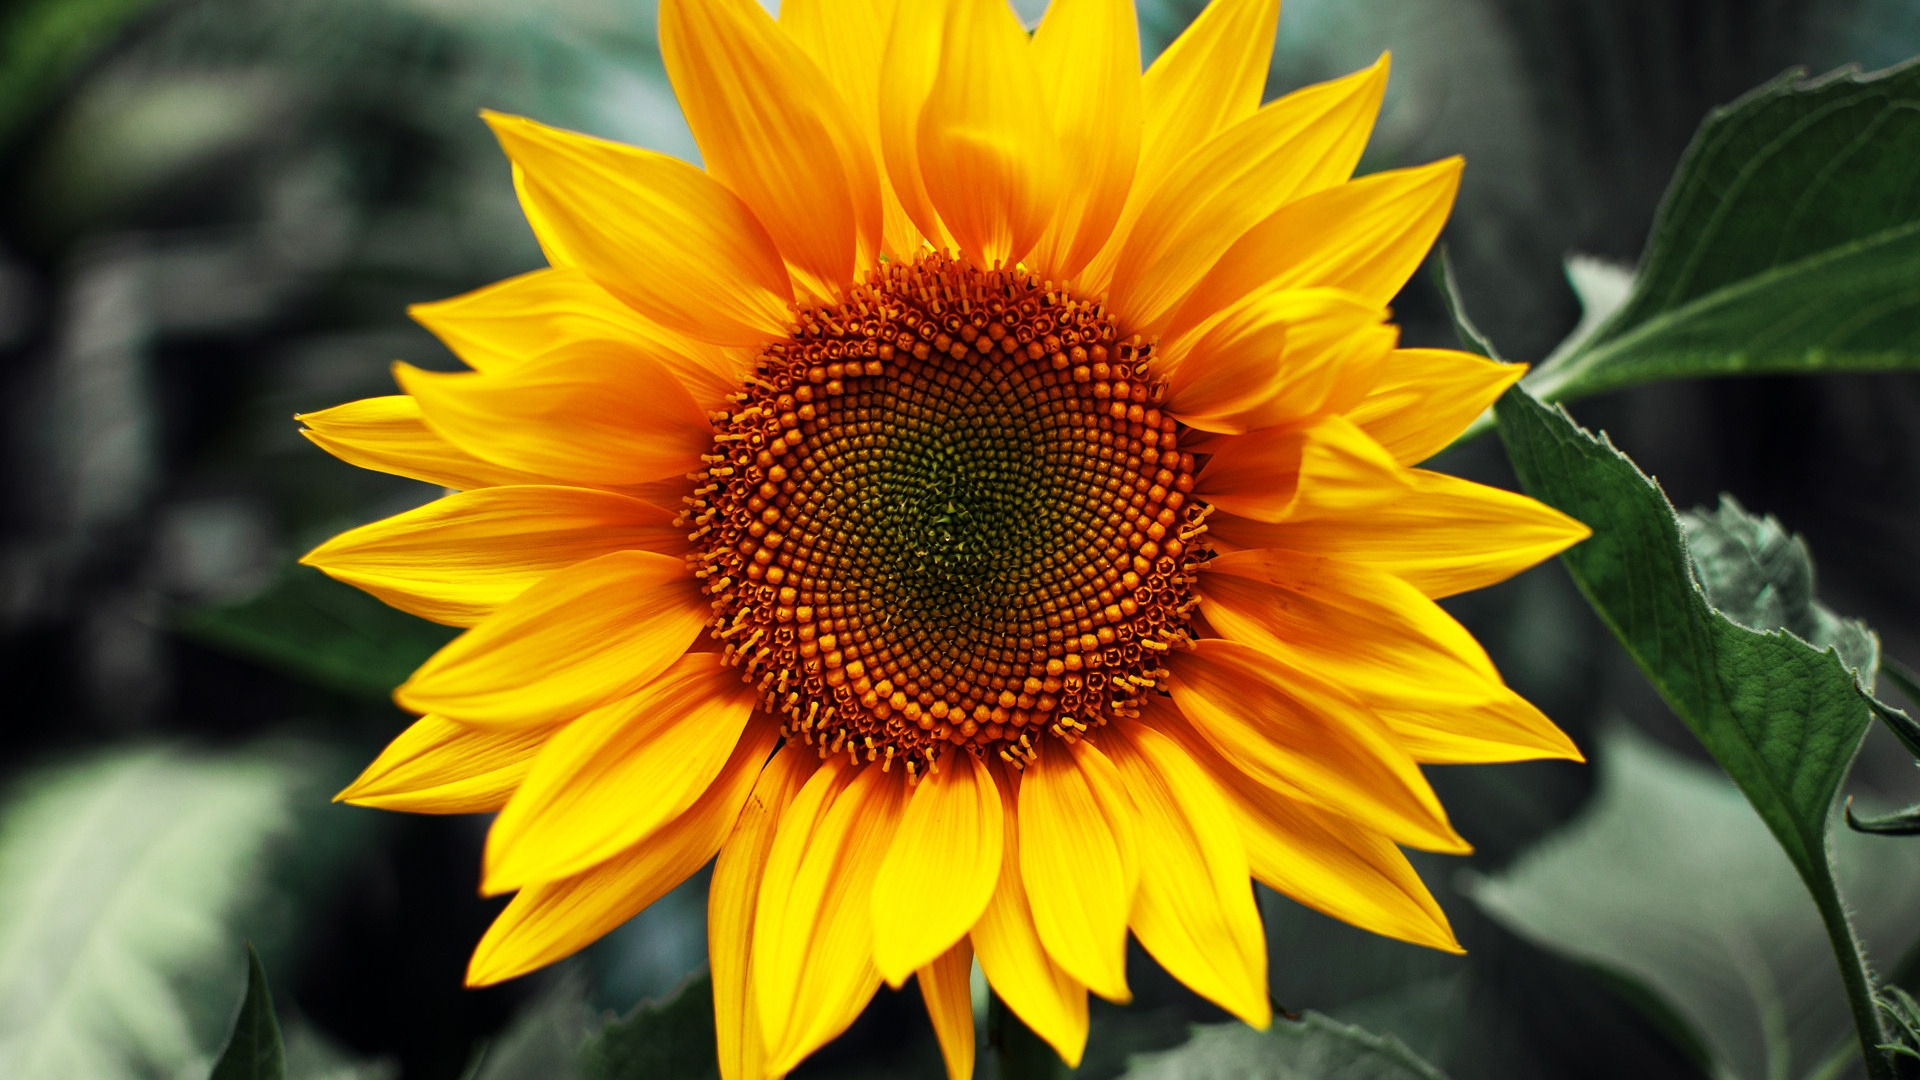 Just Sunflower for 1920 x 1080 HDTV 1080p resolution